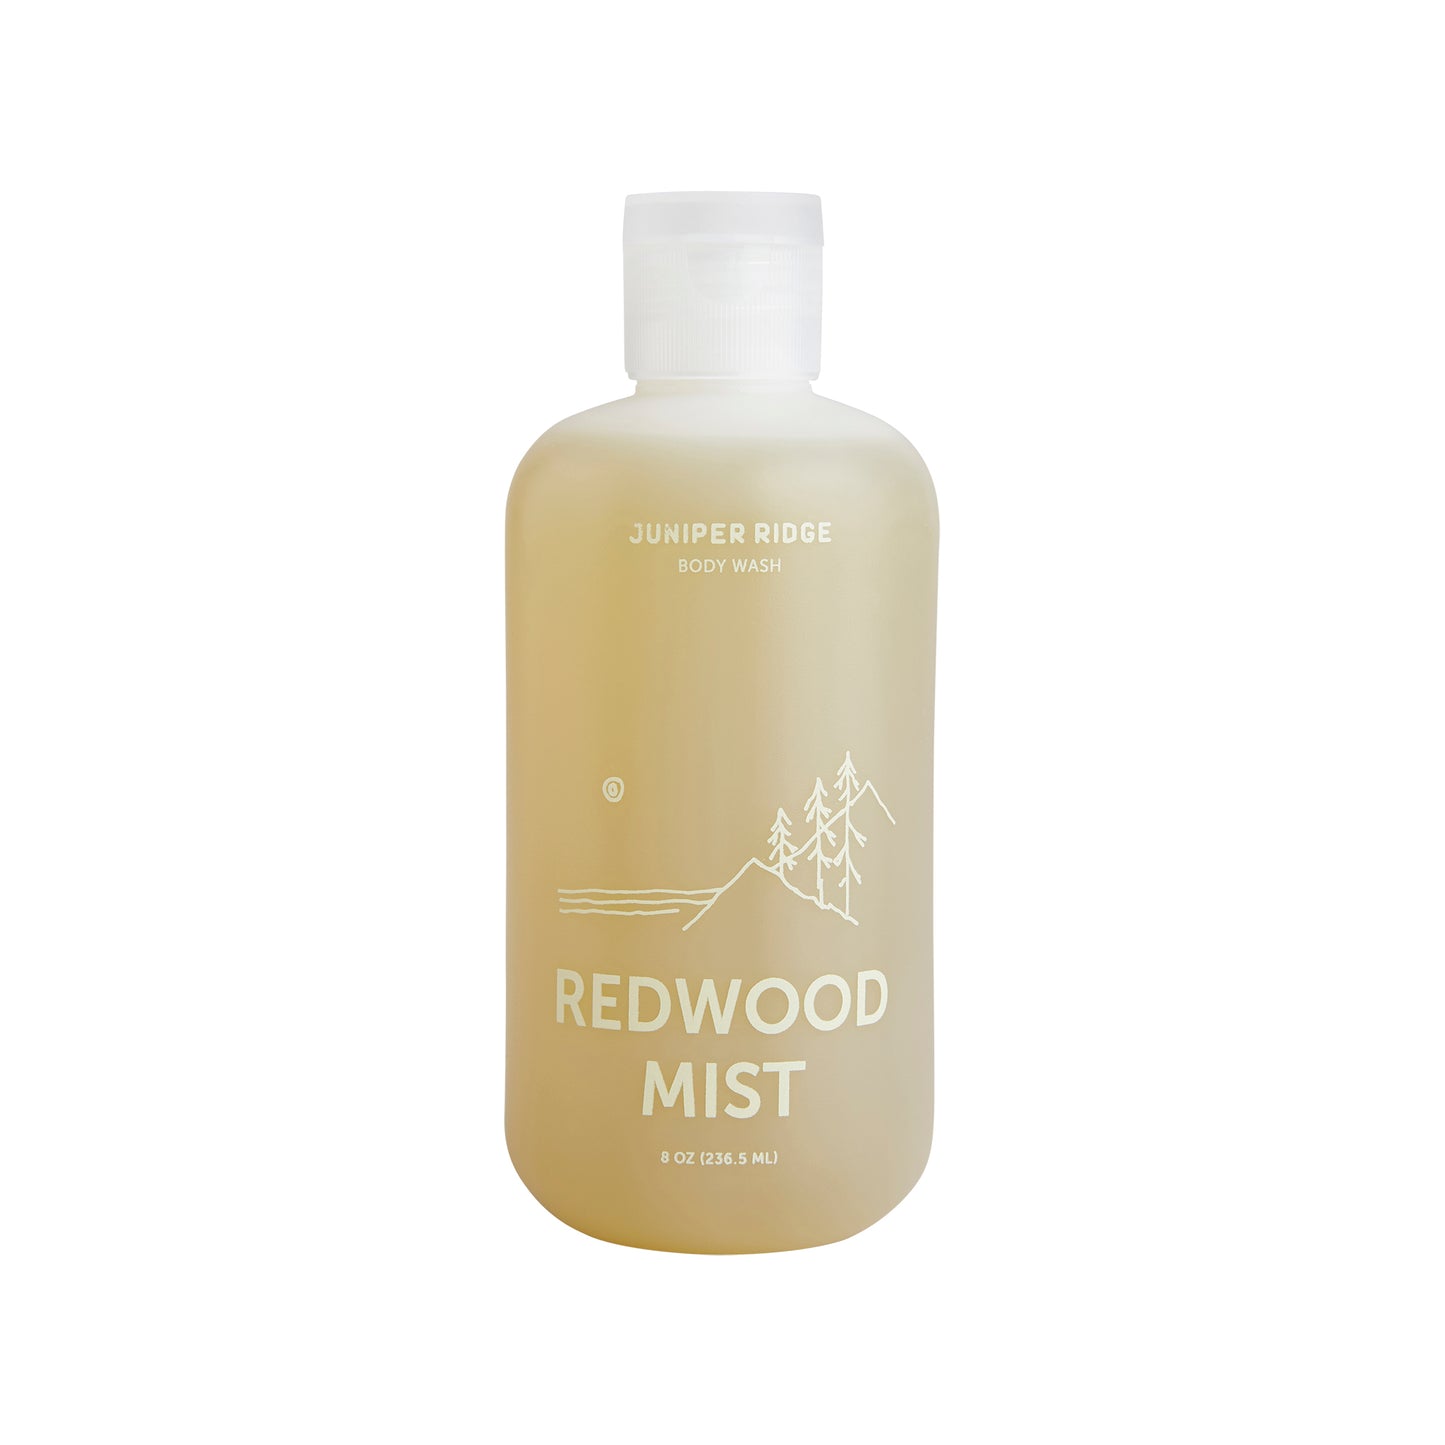 Redwood Mist Body Wash+Soap - Juniper Ridge